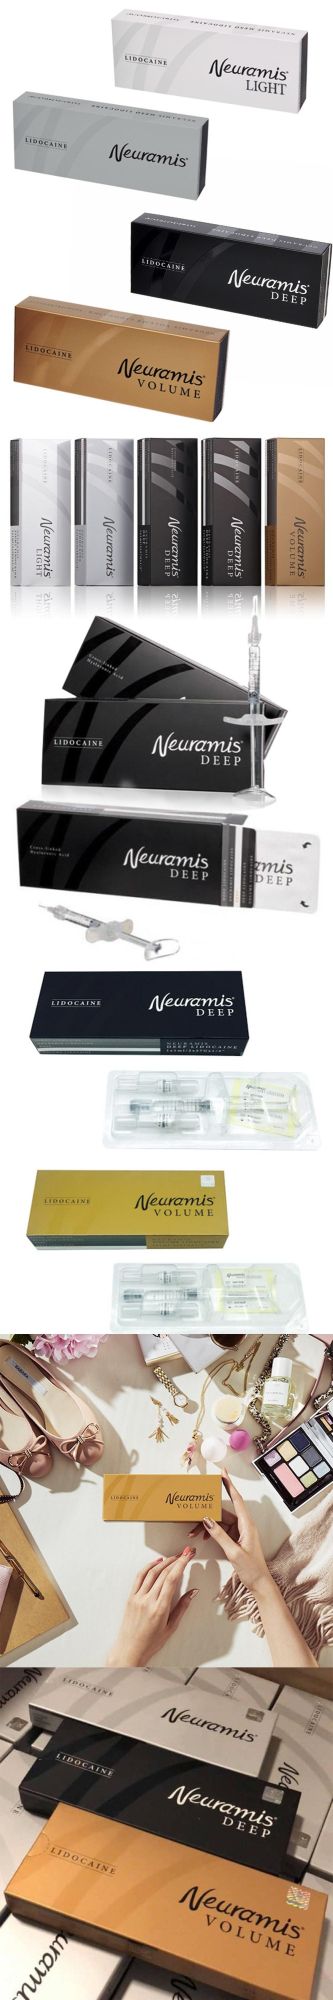 Korea Hyaluronic Acid Neuramis Deep Revolax Yvoire Rejeunesse Dermal Filler for Lip Injections